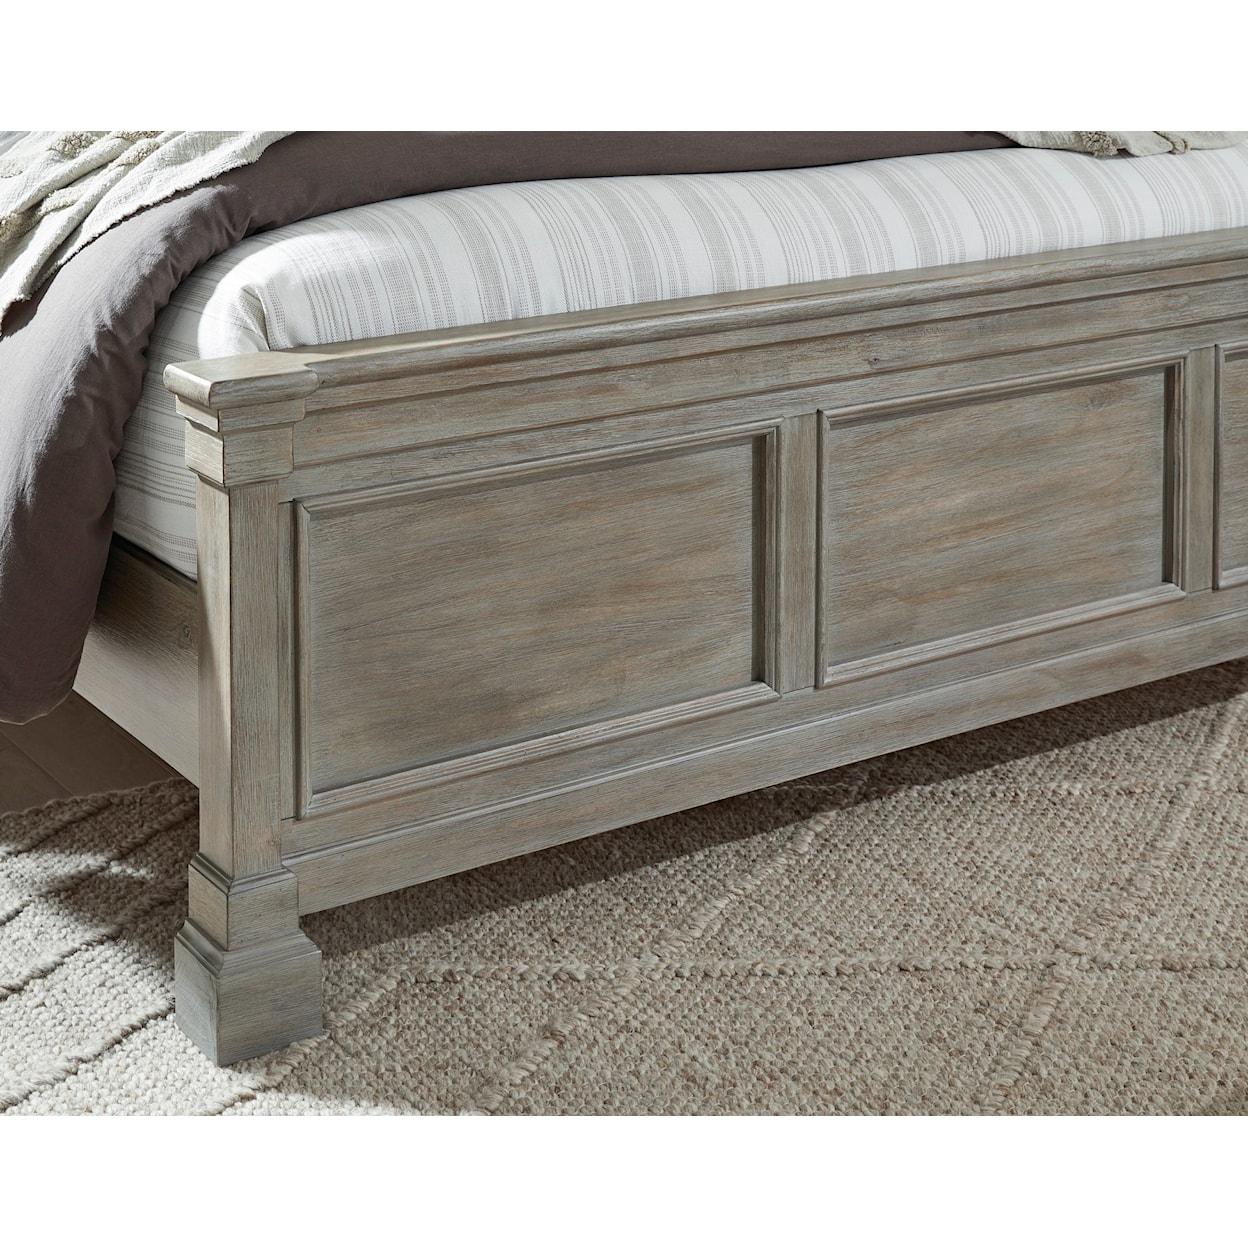 Ashley Furniture Signature Design Moreshire California King Panel Bed